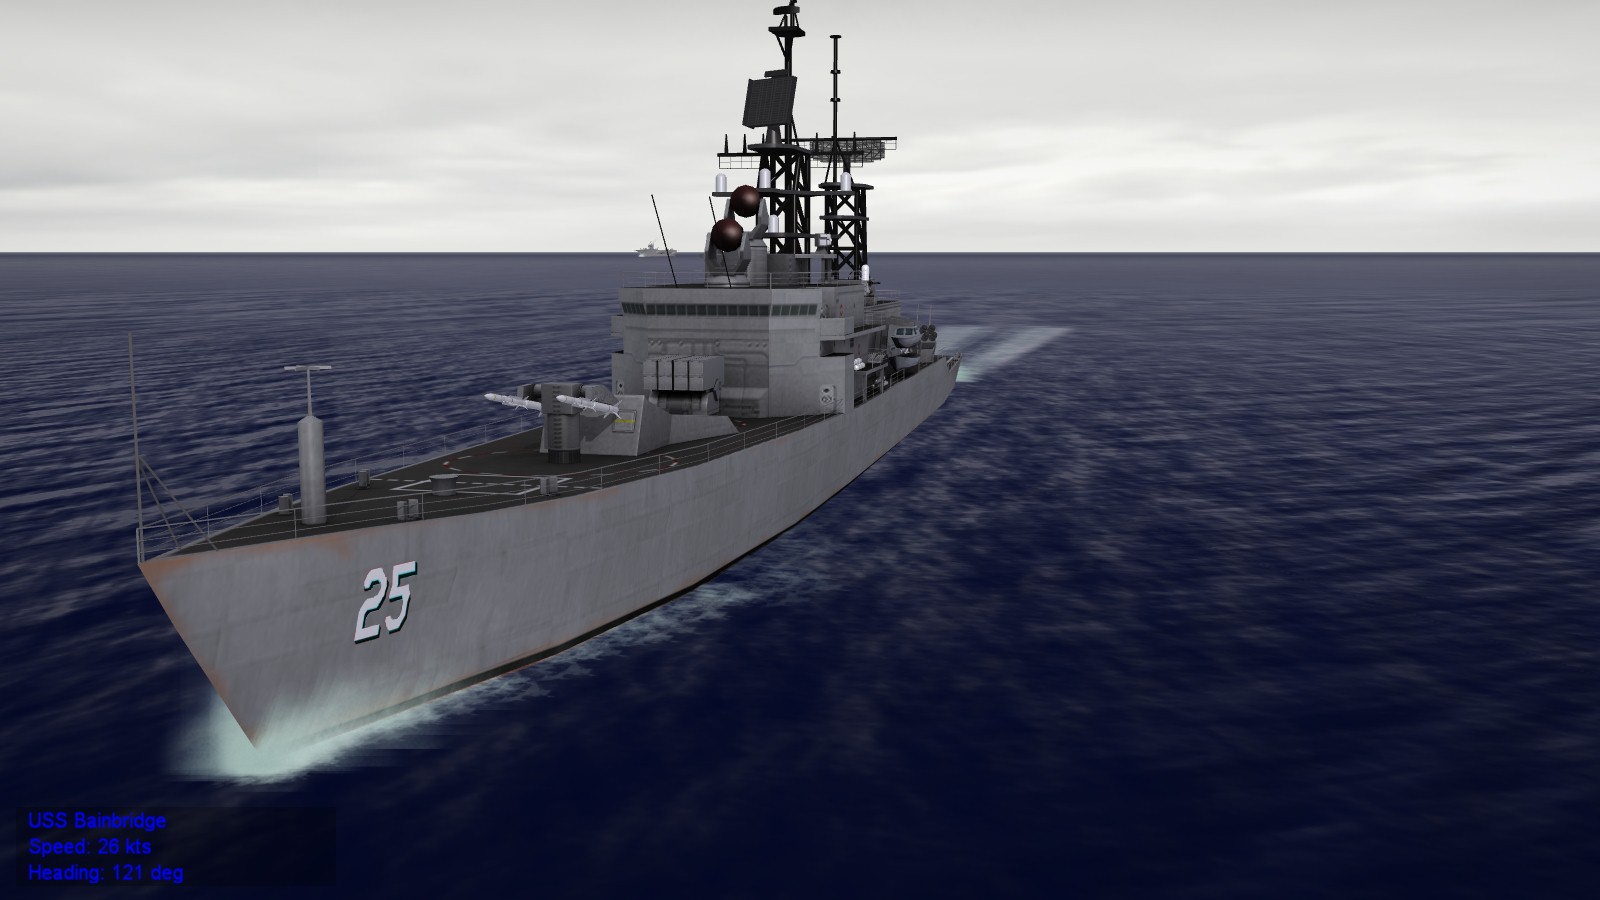 CGN-25 USS Bainbridge